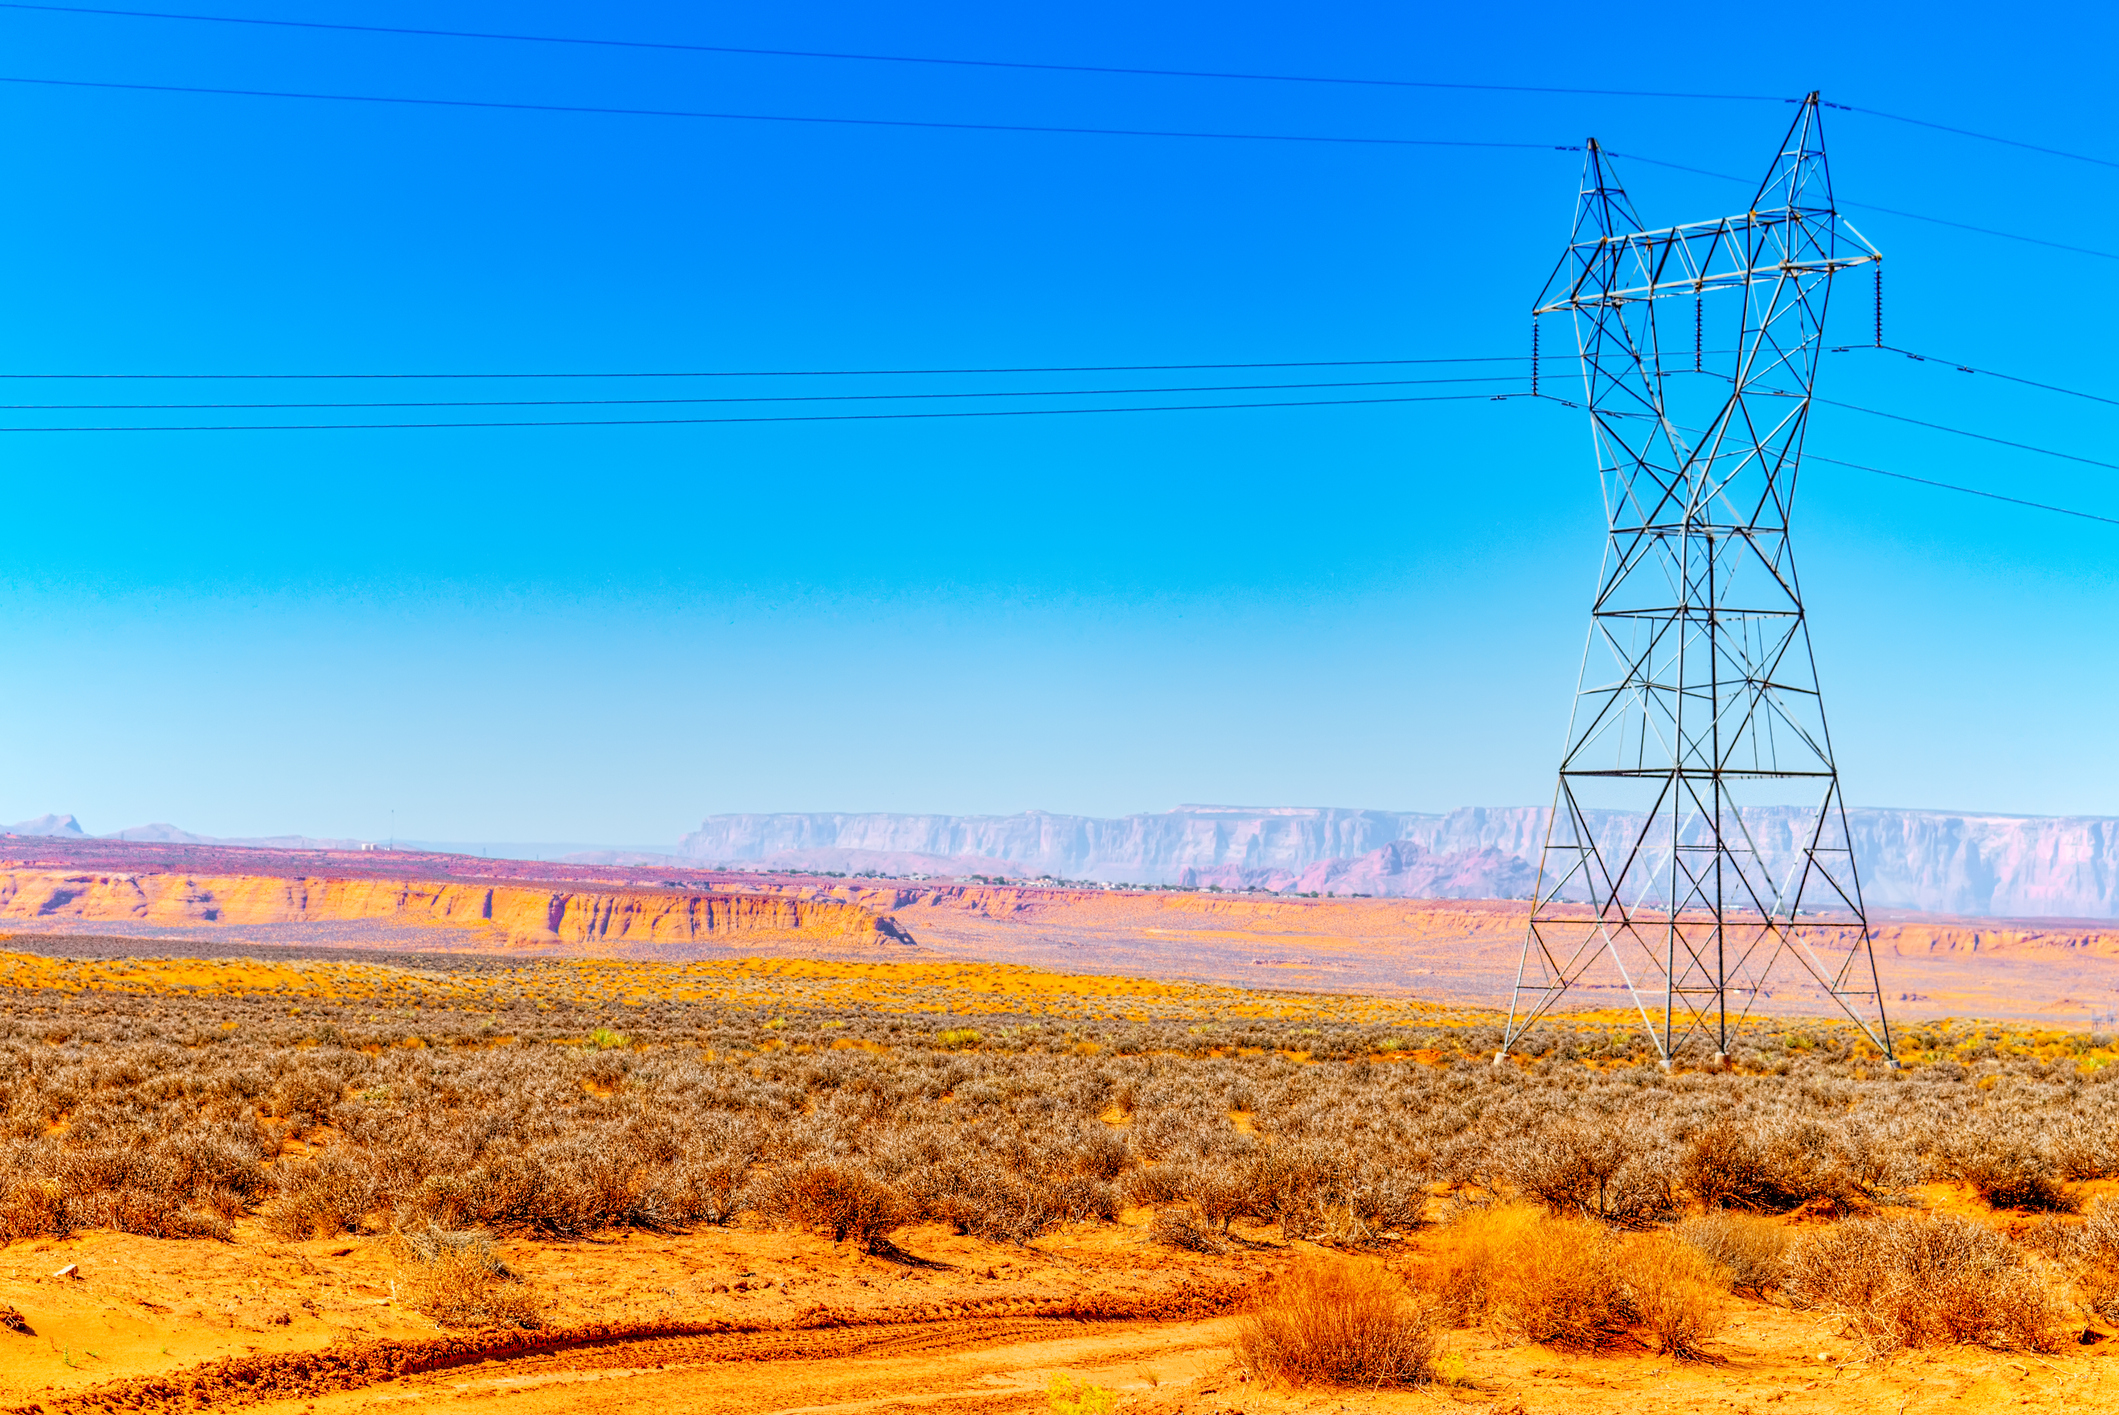 a power lines in a desert